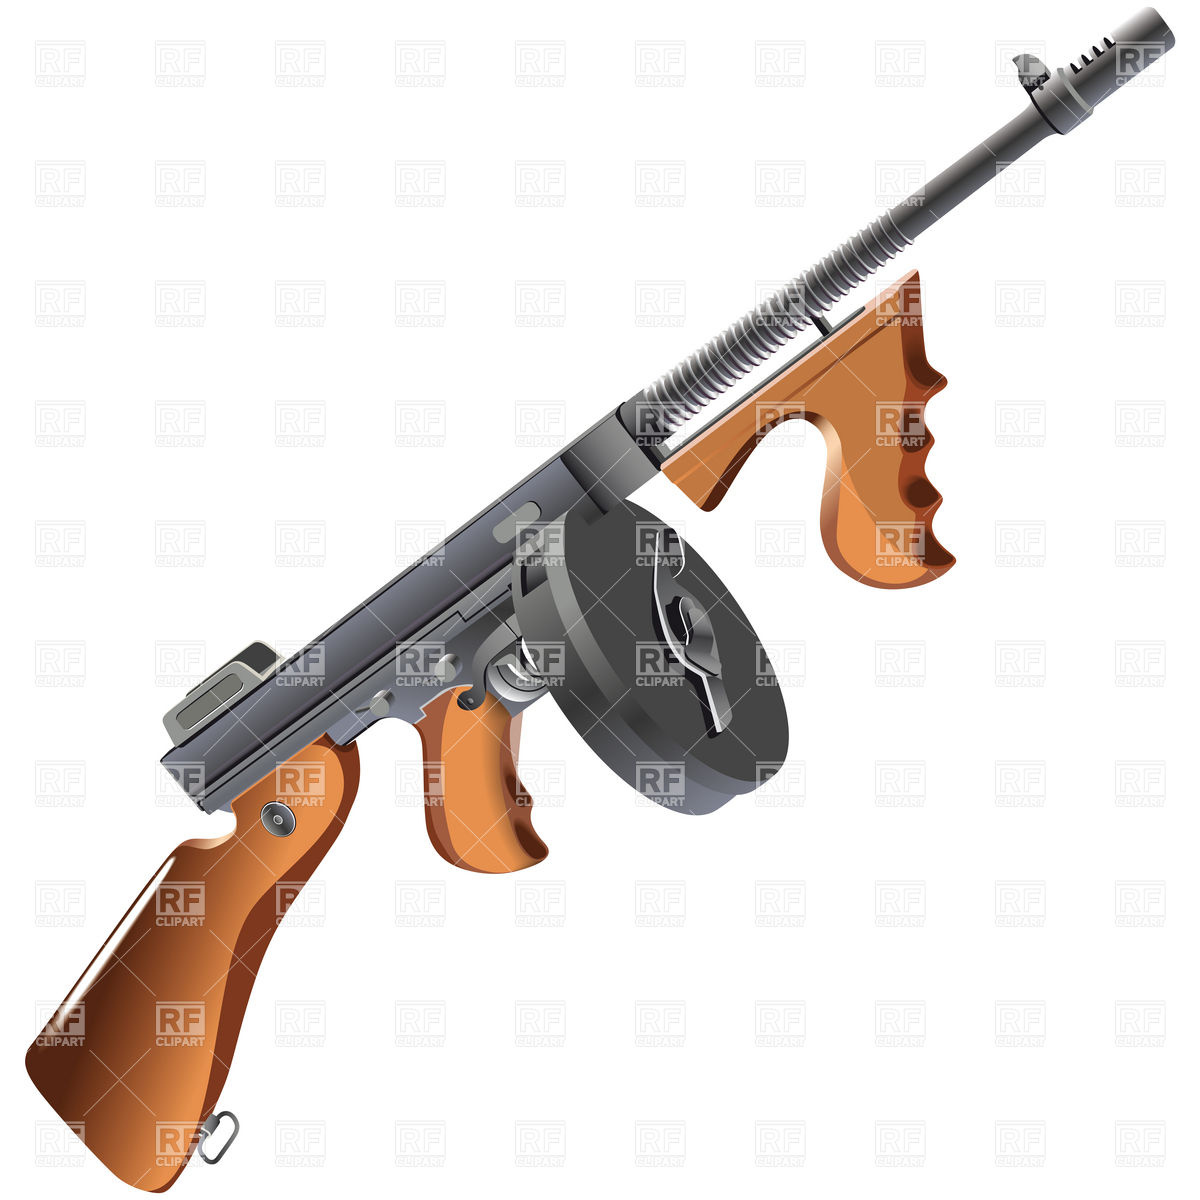 Machinegun   Tommy Gun   Weapon Of Mafia 6211 Objects Download